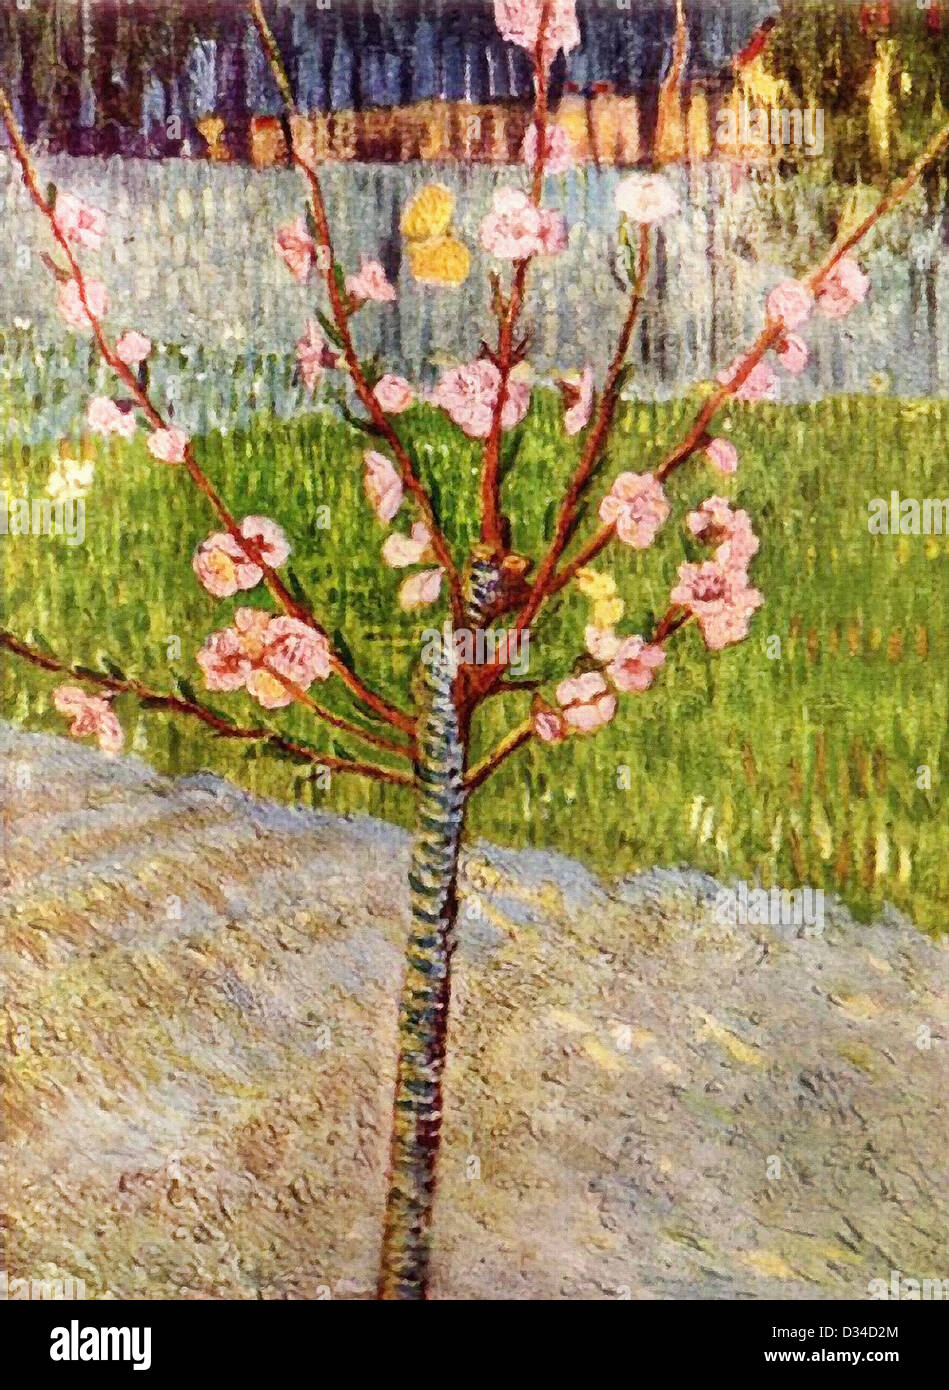 Vincent van Gogh - Almond Blossom - Van Gogh Museum